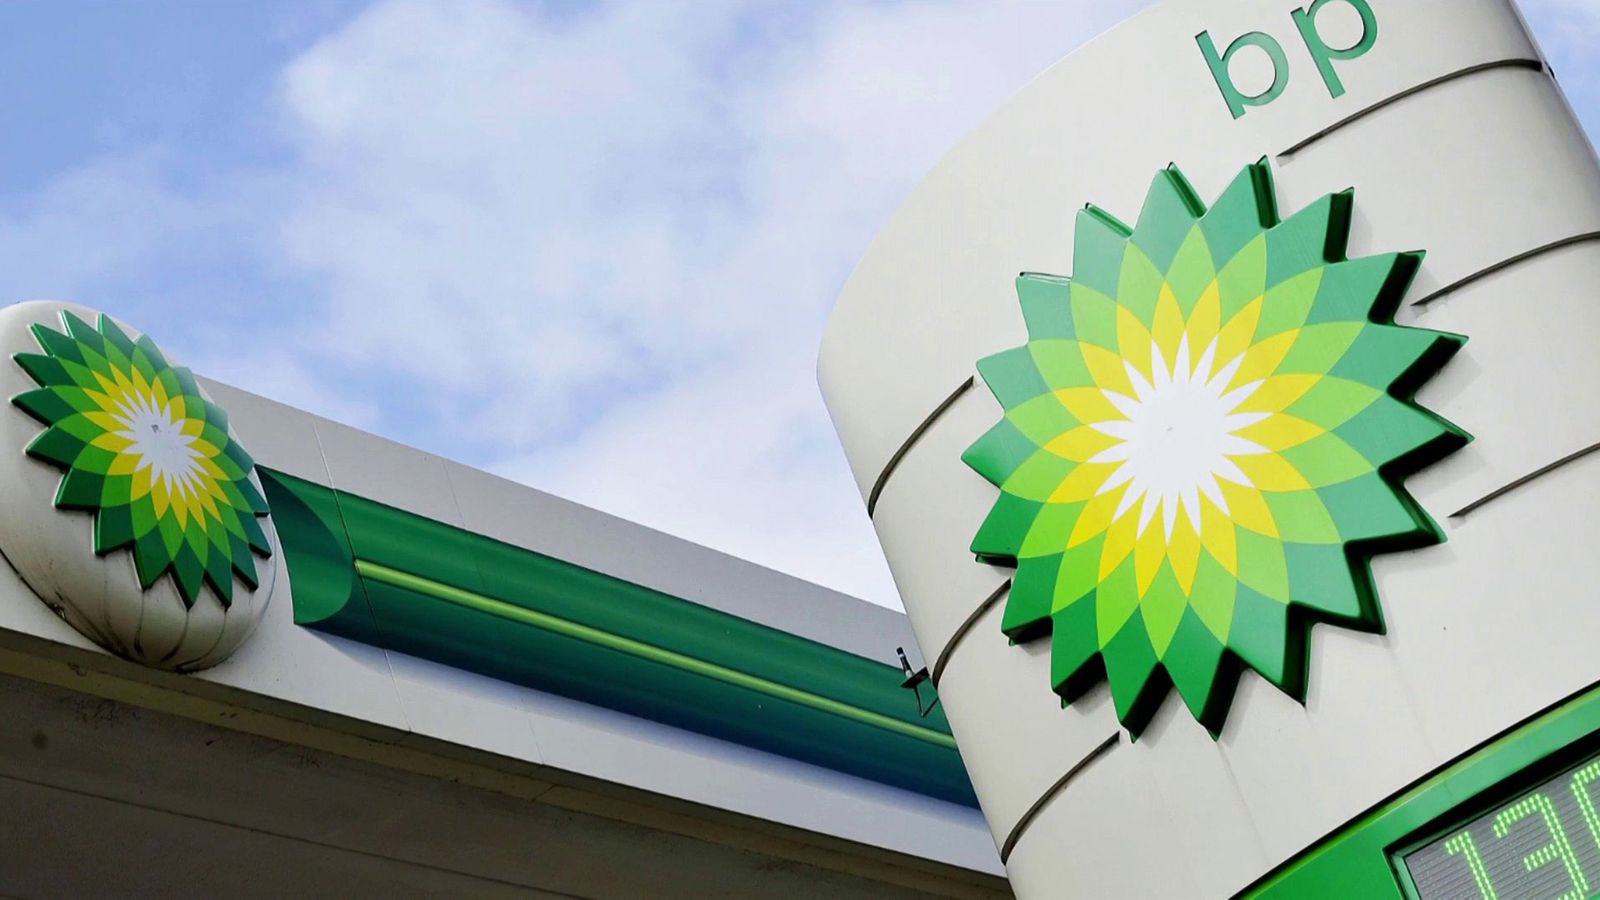 BP profits ease to bn in first quarter- but still steps up shareholder rewards